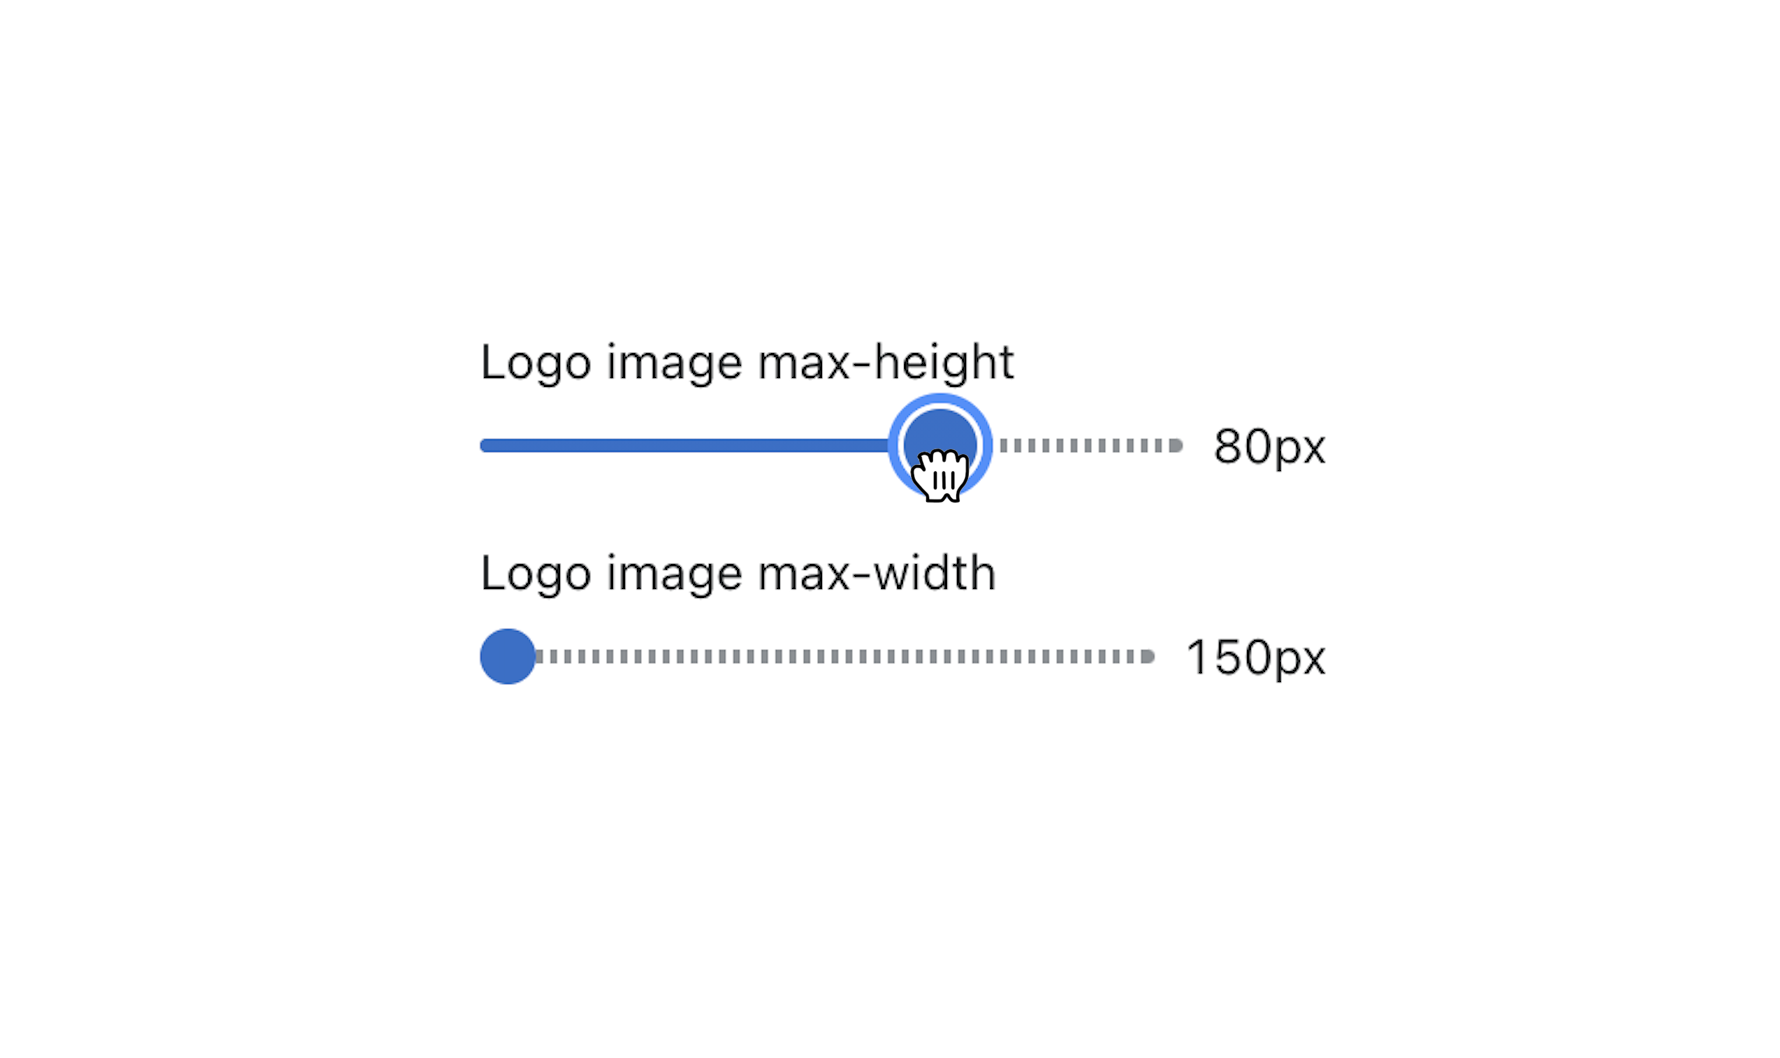 adjust_logo_image_maximum_height_using_the_provided_slider.png